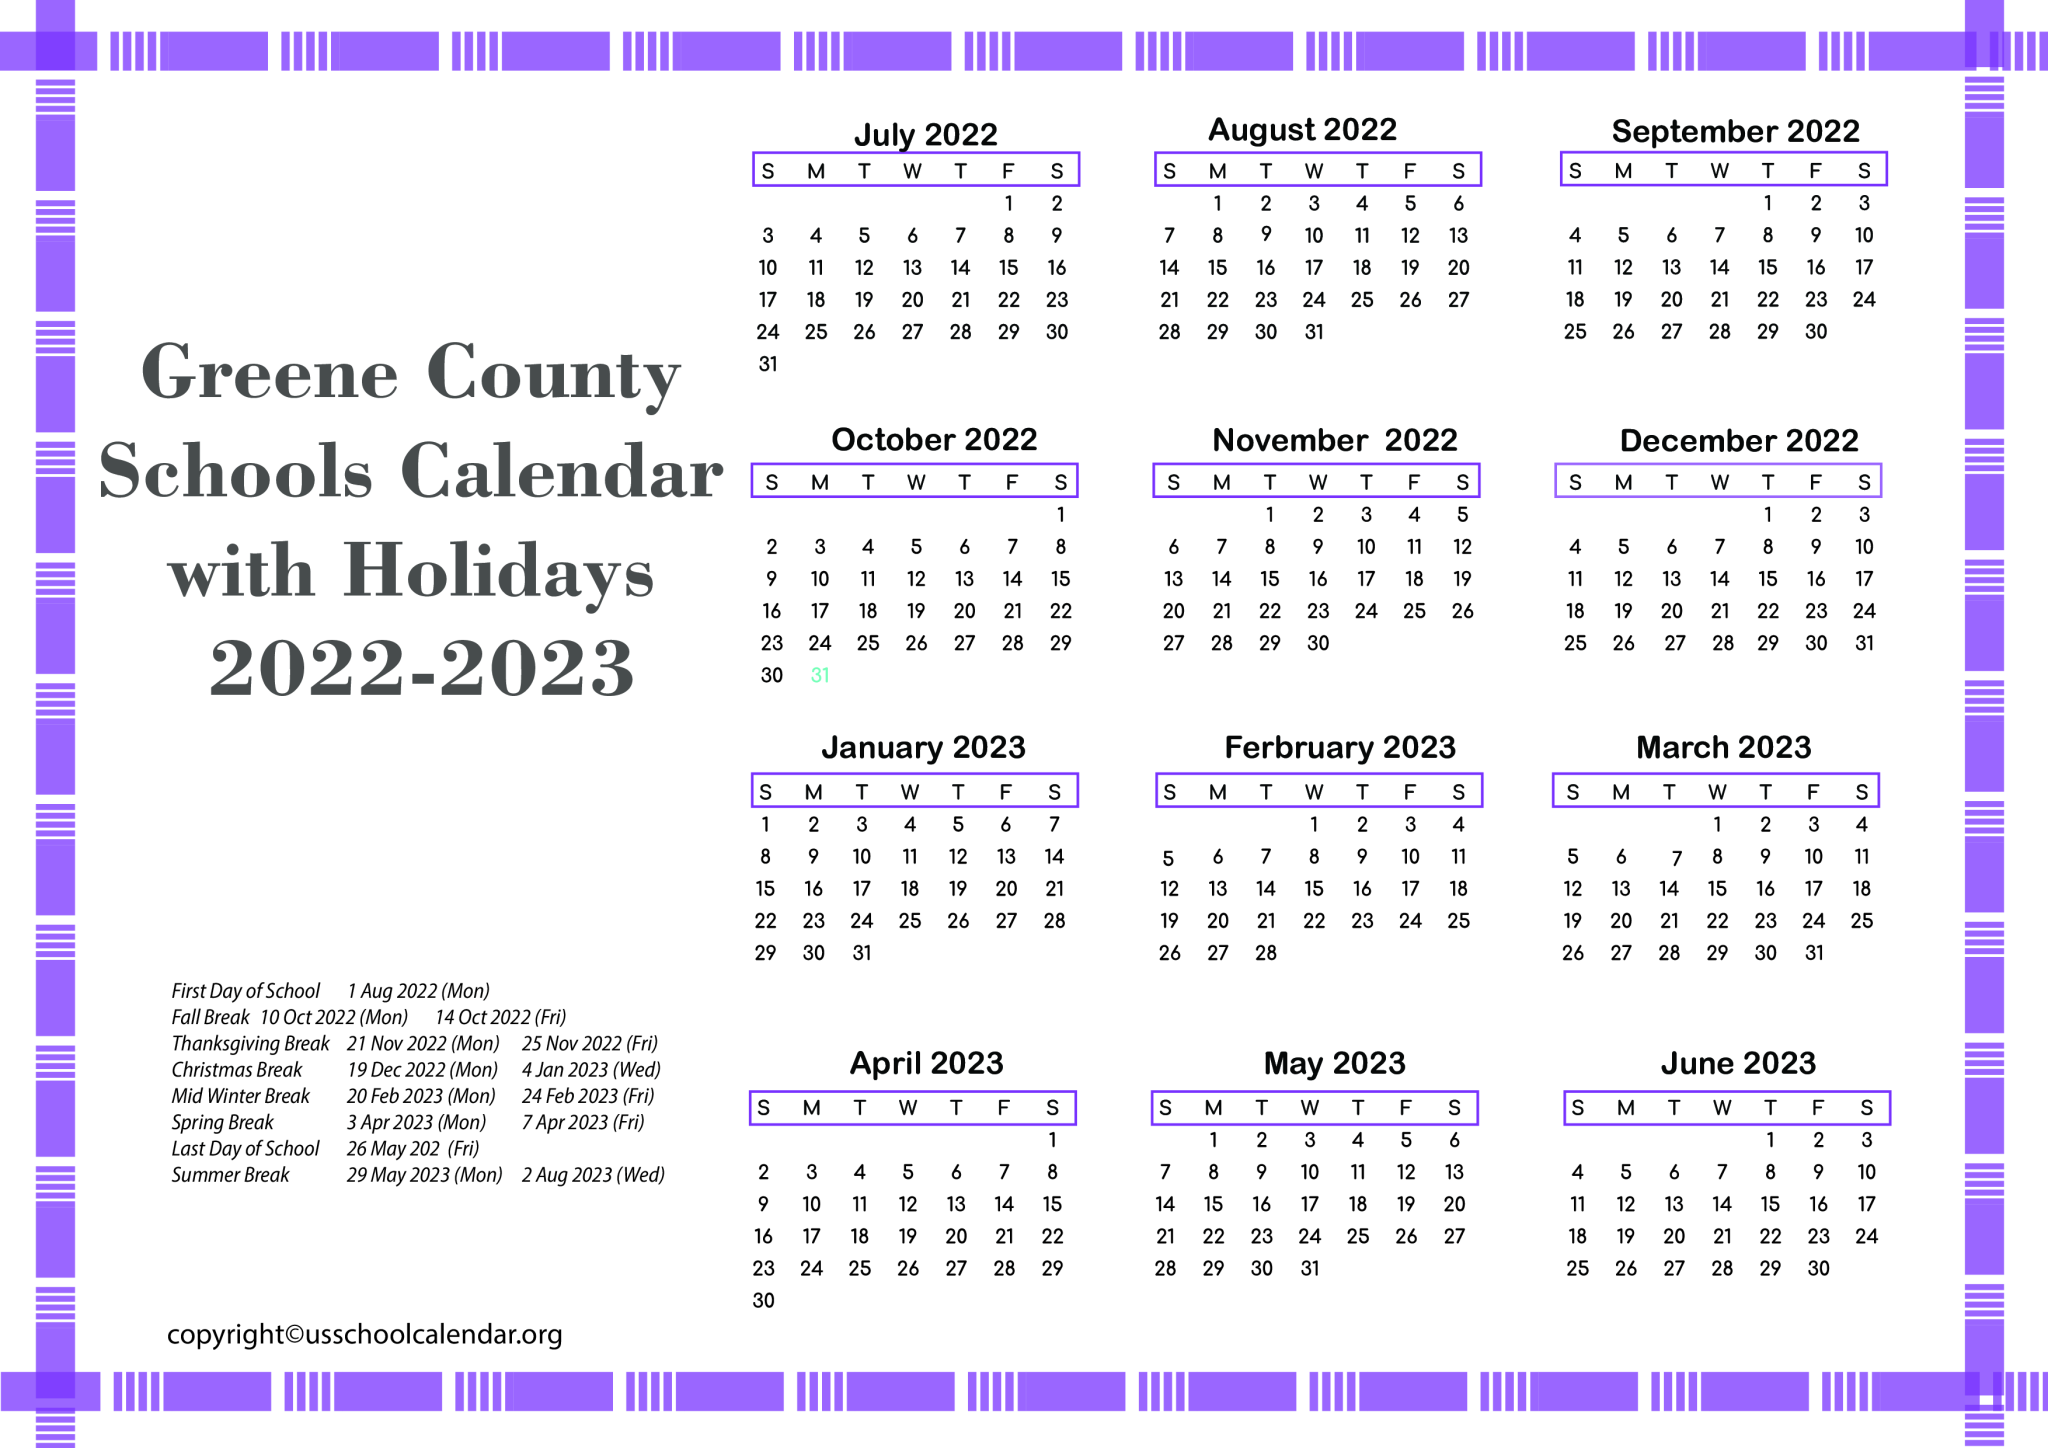 Greene County Schools Calendar with Holidays 20222023